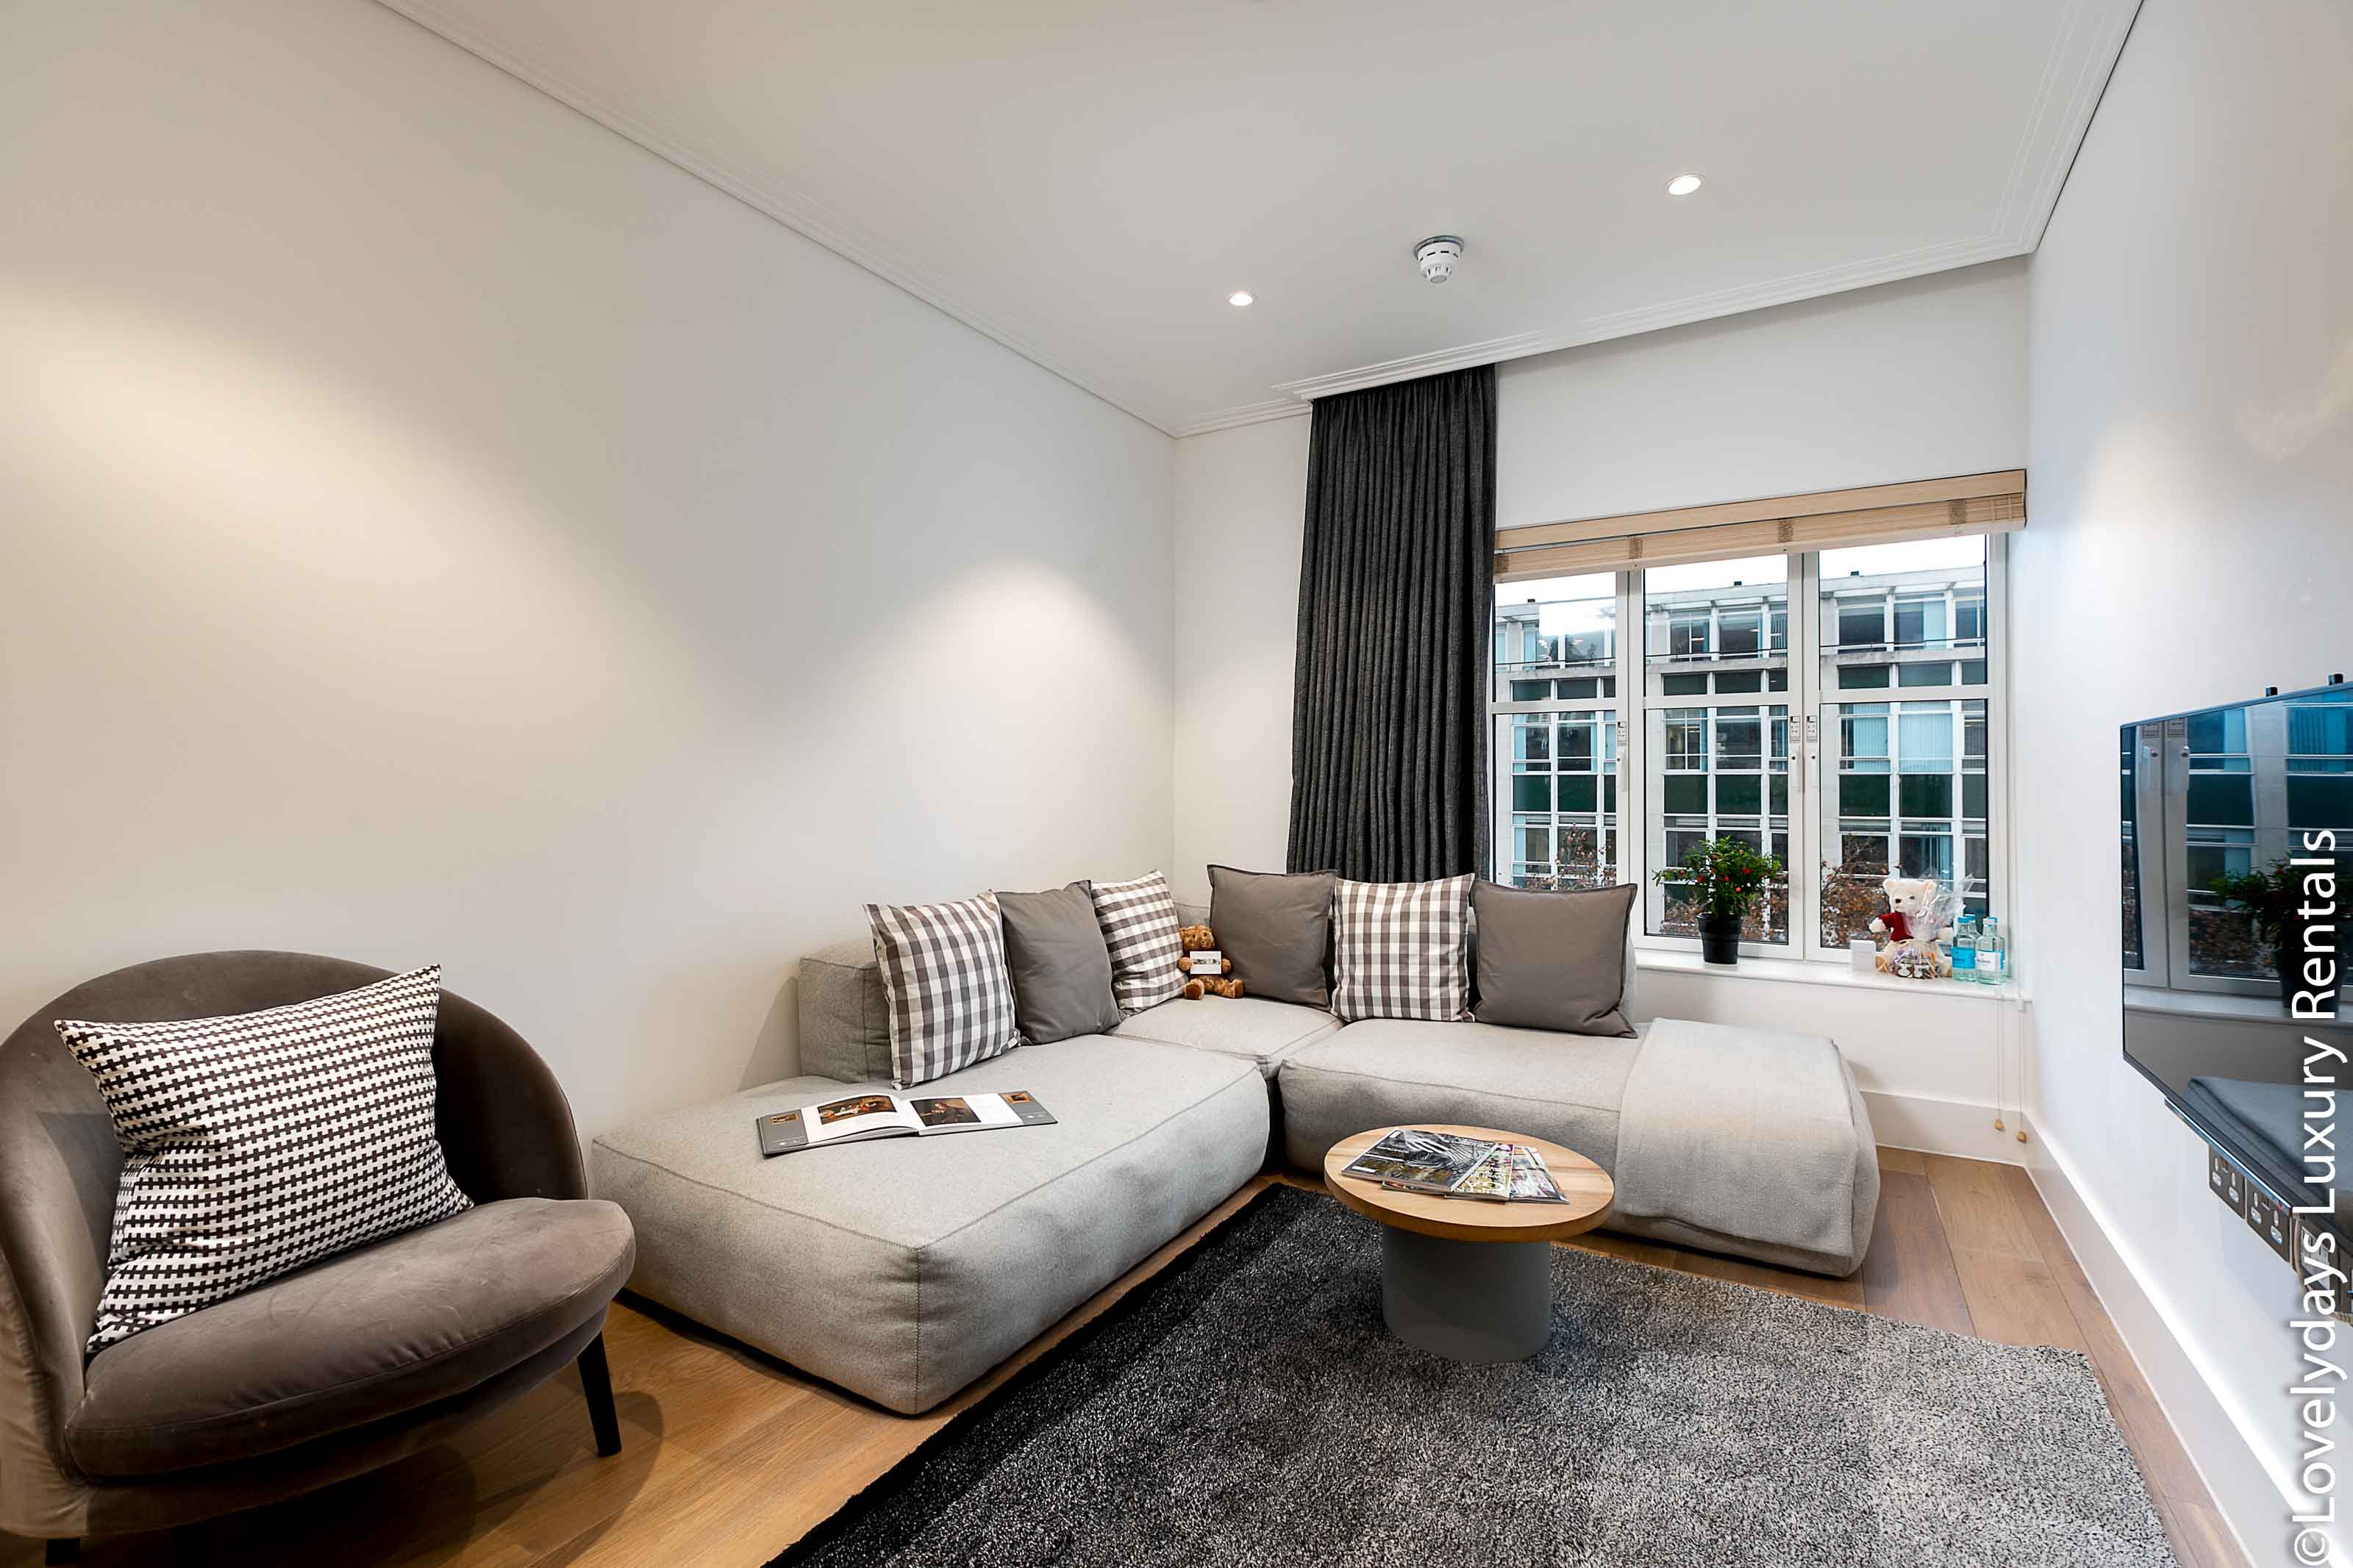 Lovelydays luxury service apartment rental - London - Covent Garden - Prince's House 601 - Lovelysuite - 2 bedrooms - 1 bathrooms - Comfortable sofa - TV system - 0c3d9155ac66 - Lovelydays